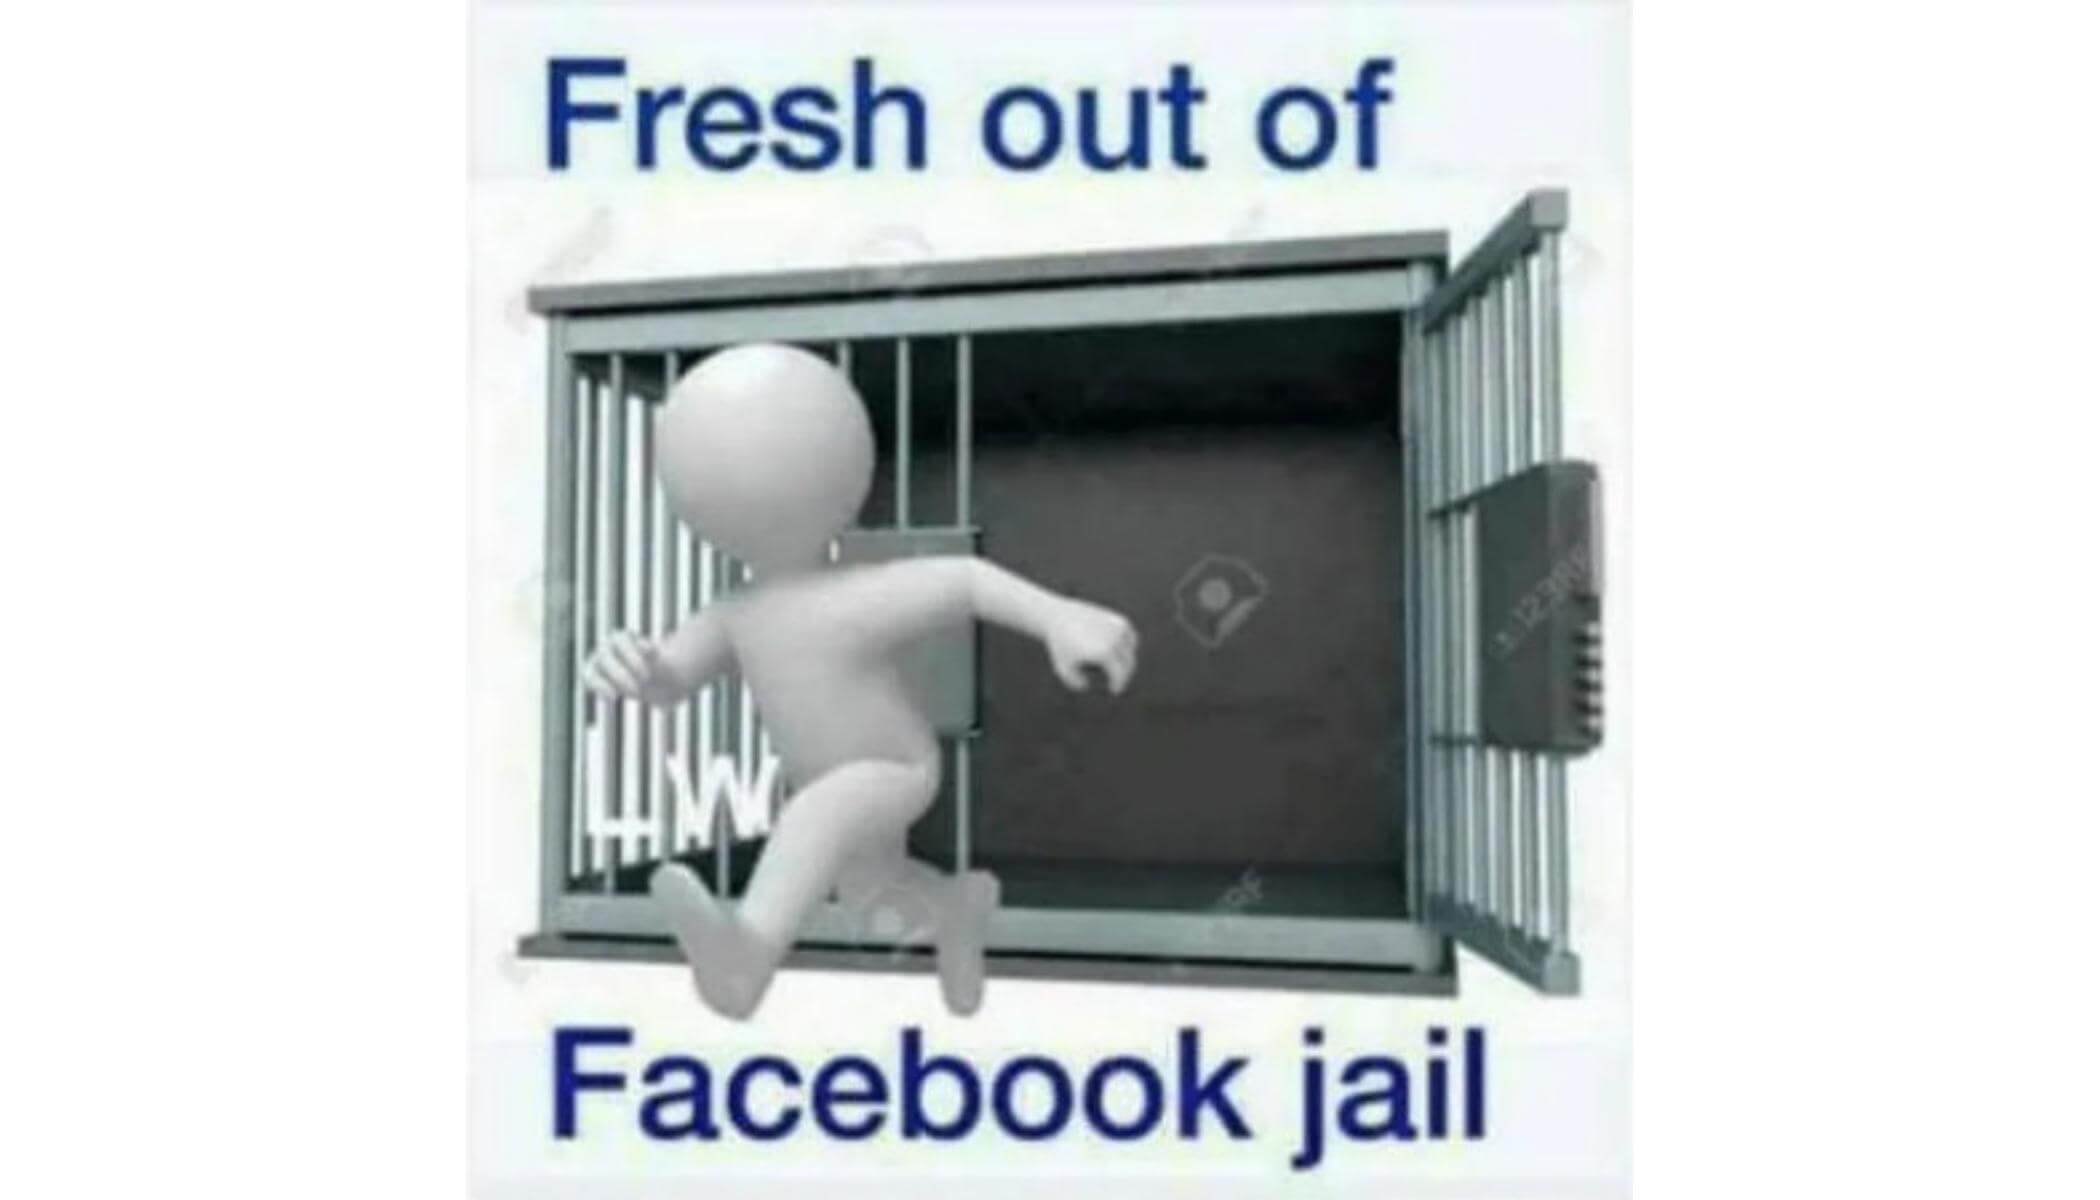 Out of Facebook jail meme